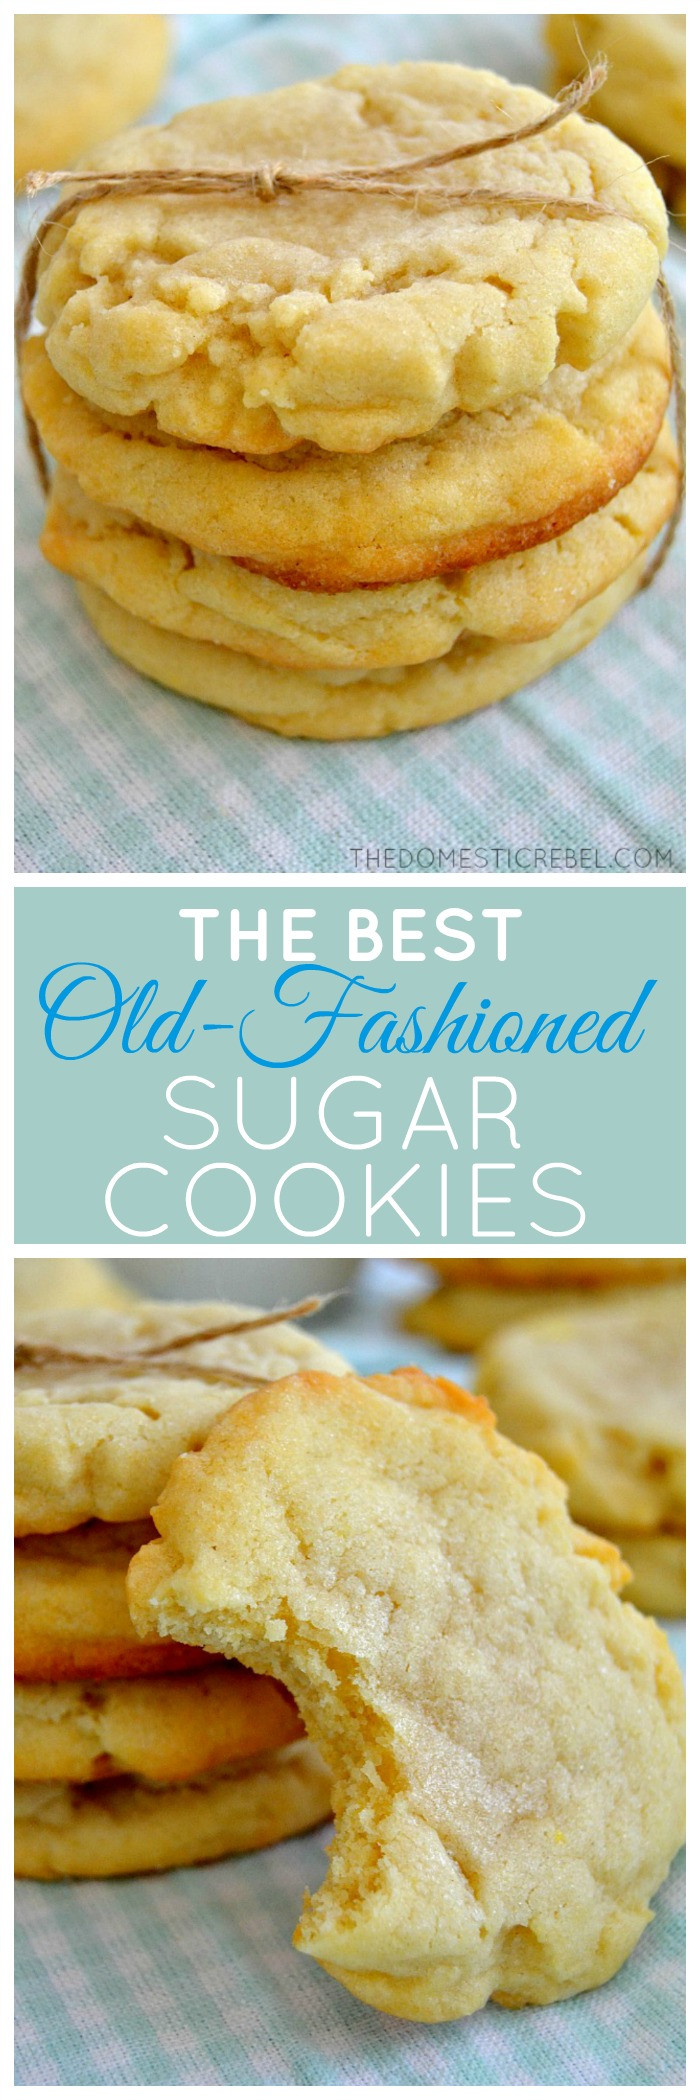 Best Sugar Cookies
 The Best Old Fashioned Sugar Cookies